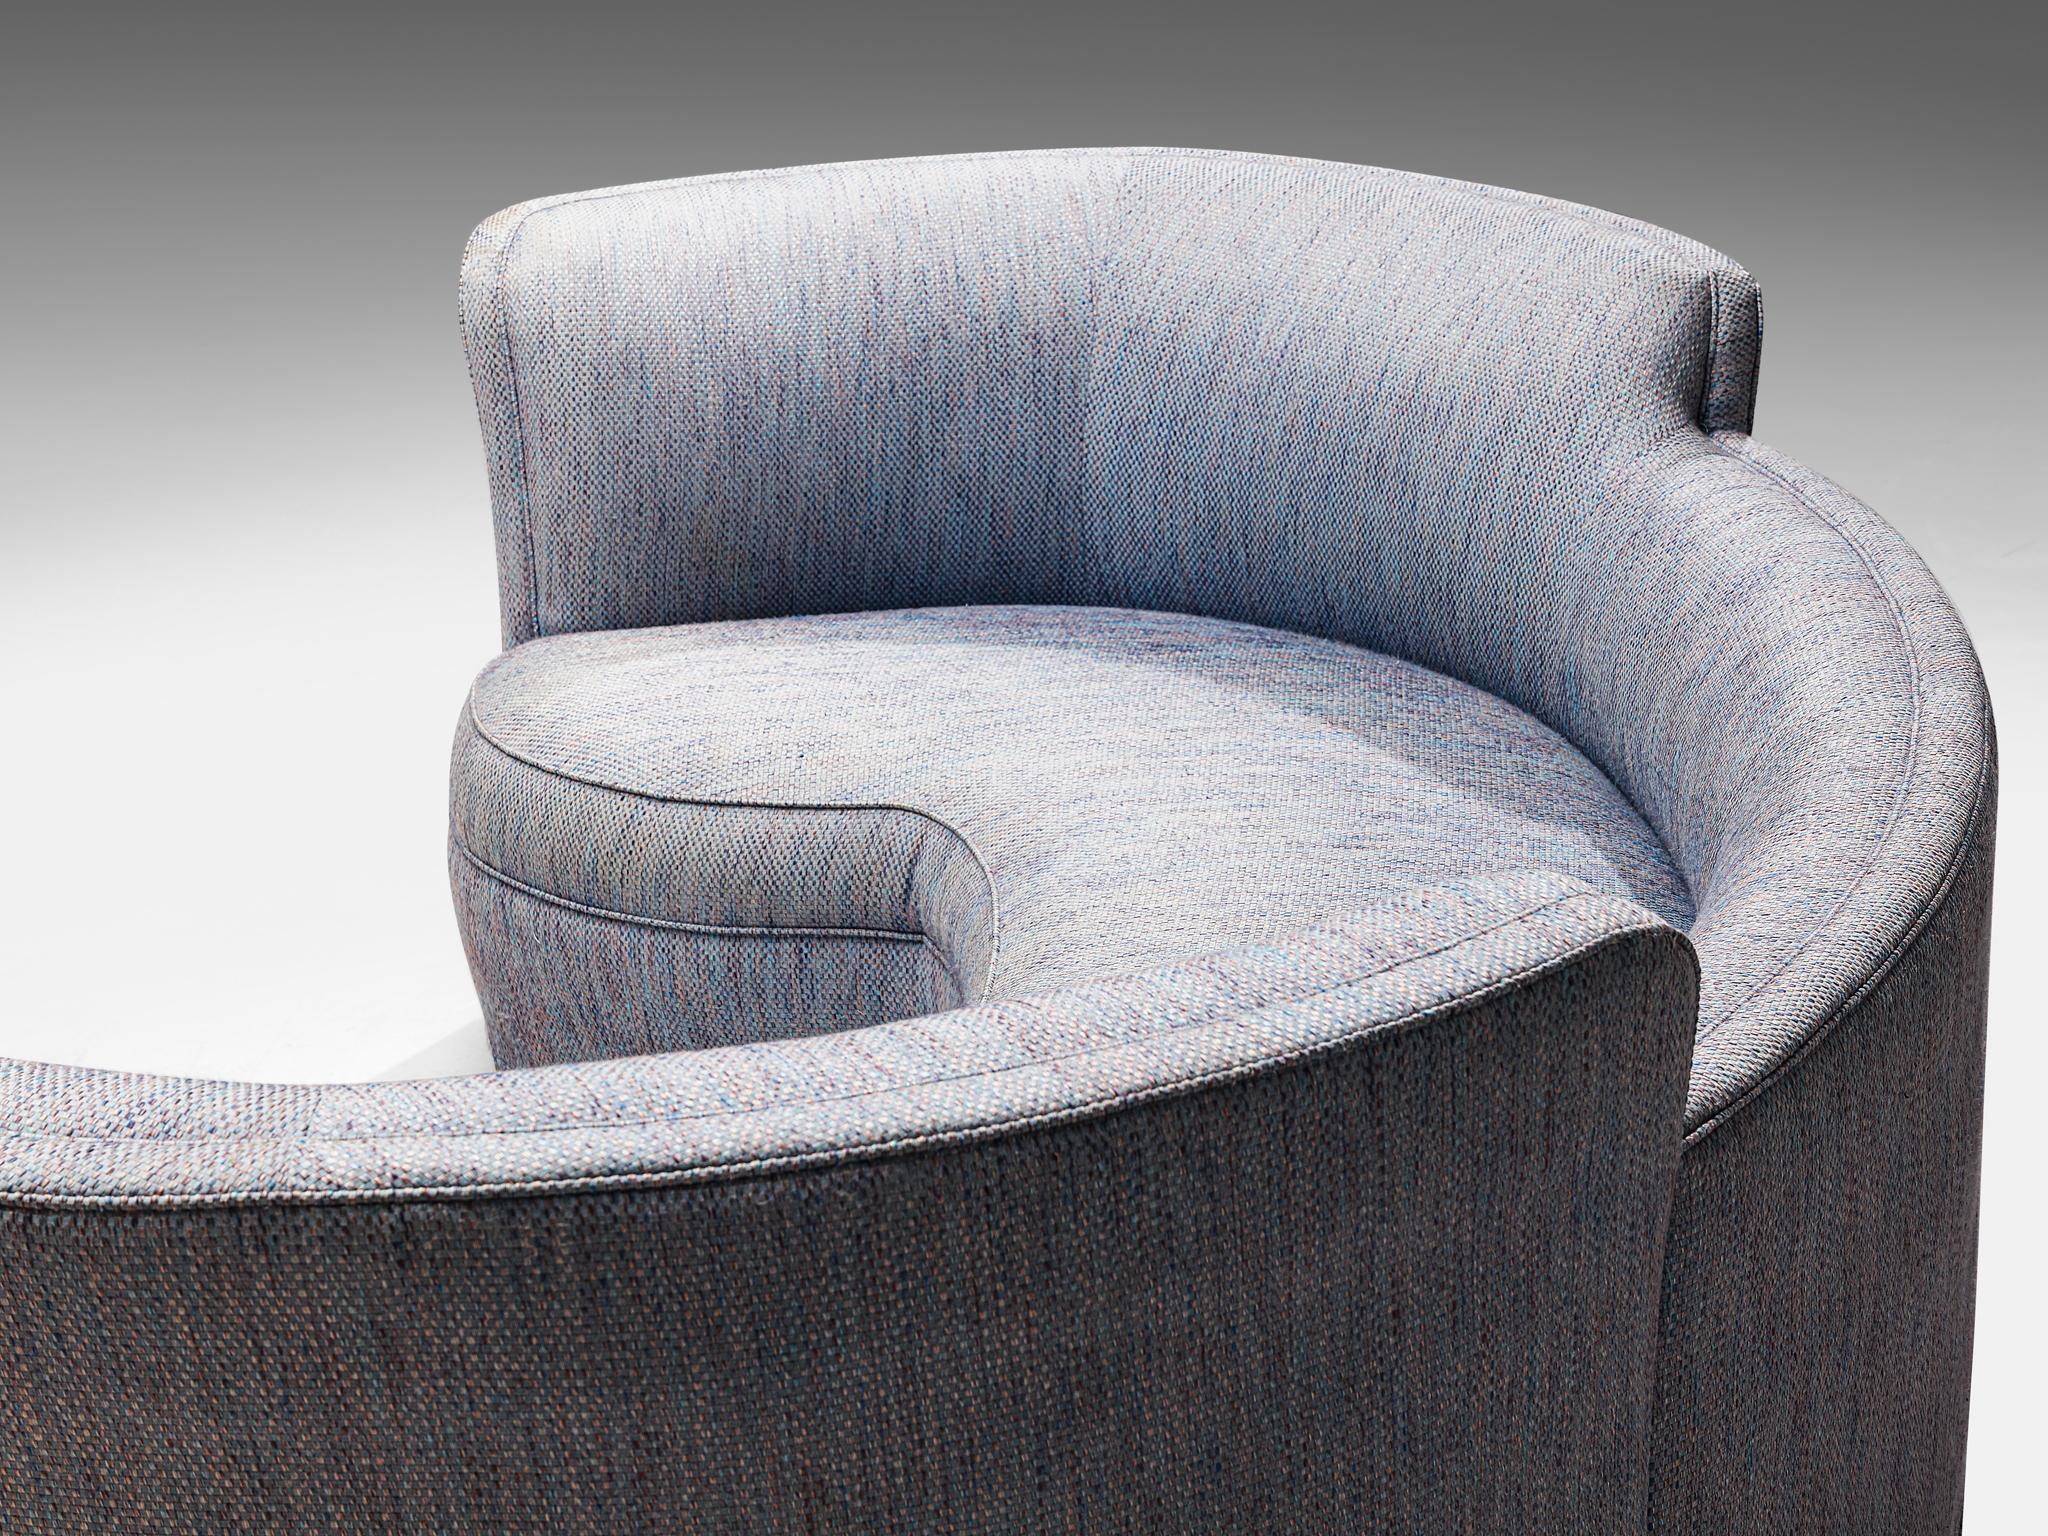 Edward Wormley 'Oasis' Sofa Model 5200 1